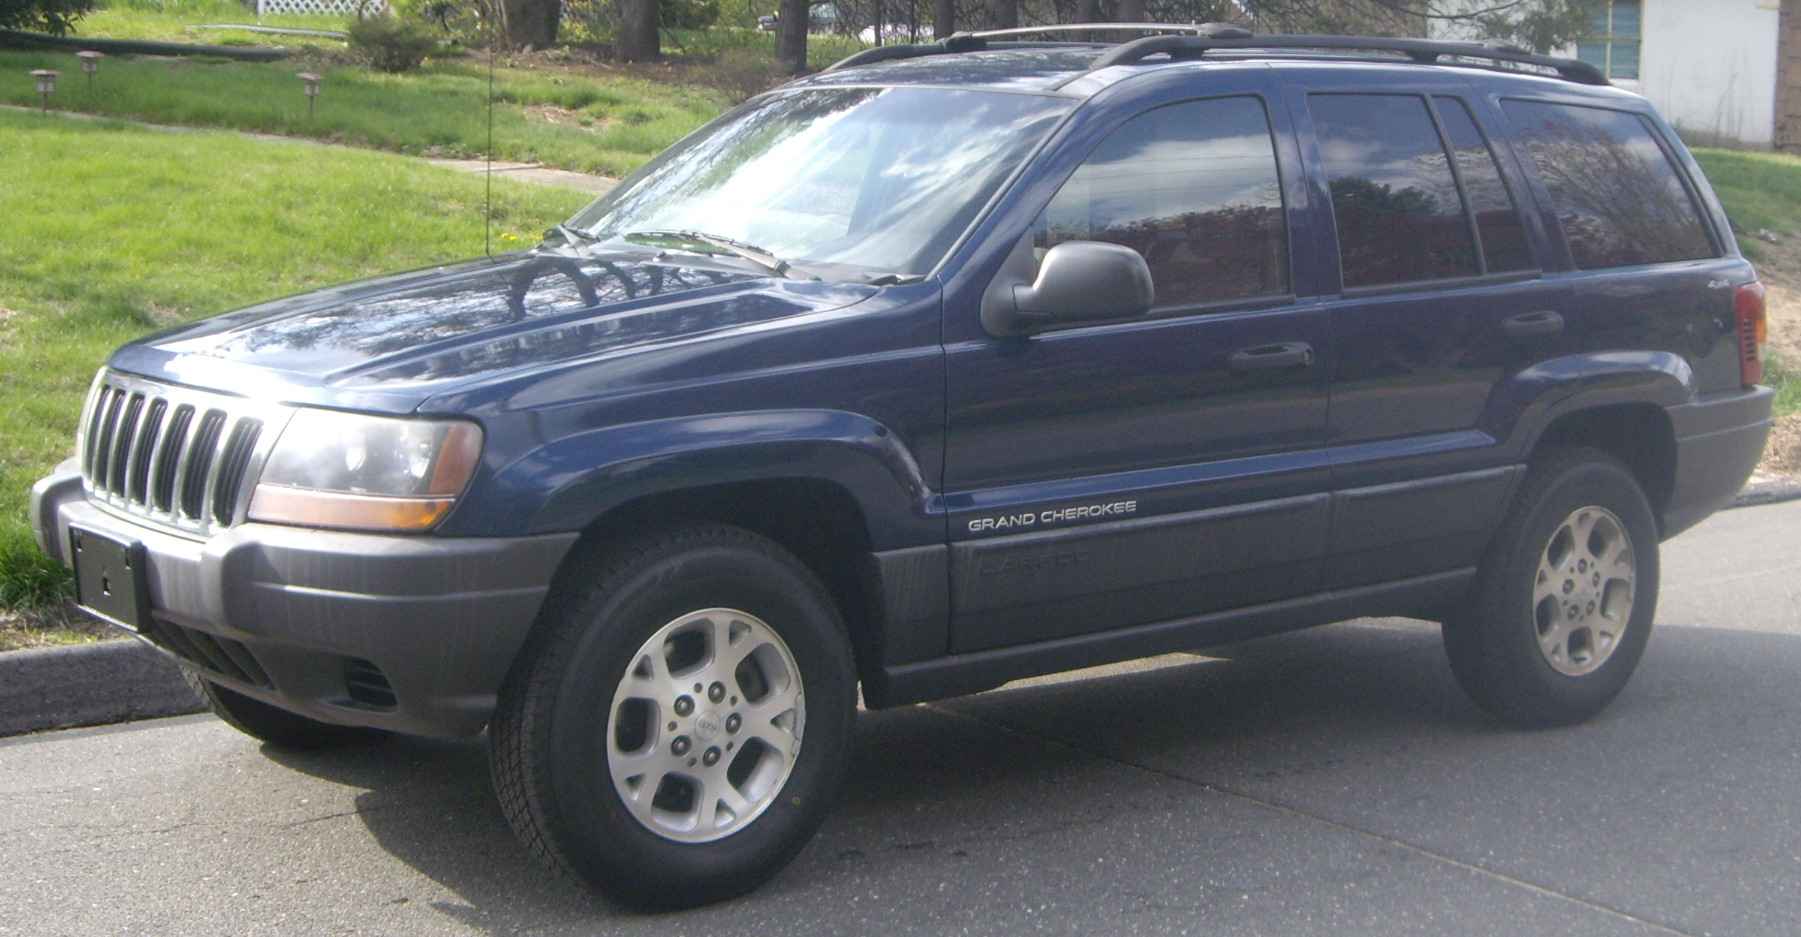 2000 год на продажу. Jeep Cherokee 2000. Grand Cherokee 2000. Джип Гранд Чероки 2000 года. Jeep Grand Cherokee Laredo 2000.